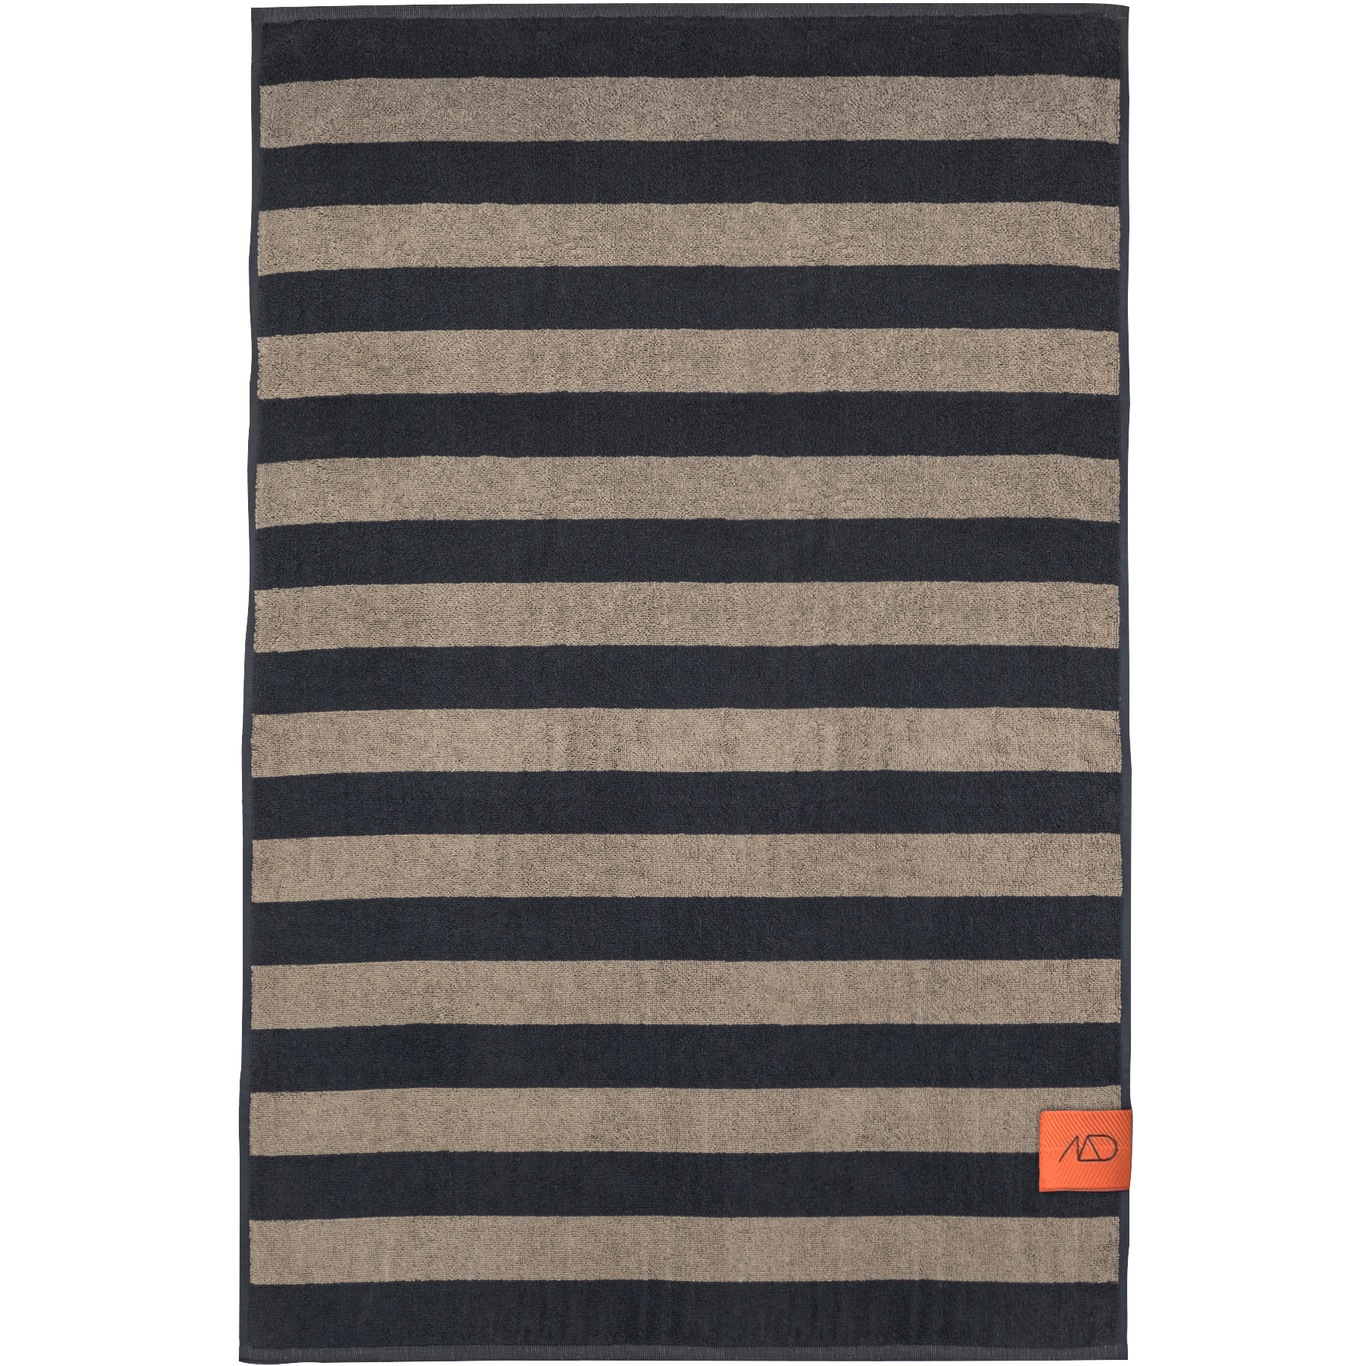 Aros Towel Sand 2-pack, 35x55 cm